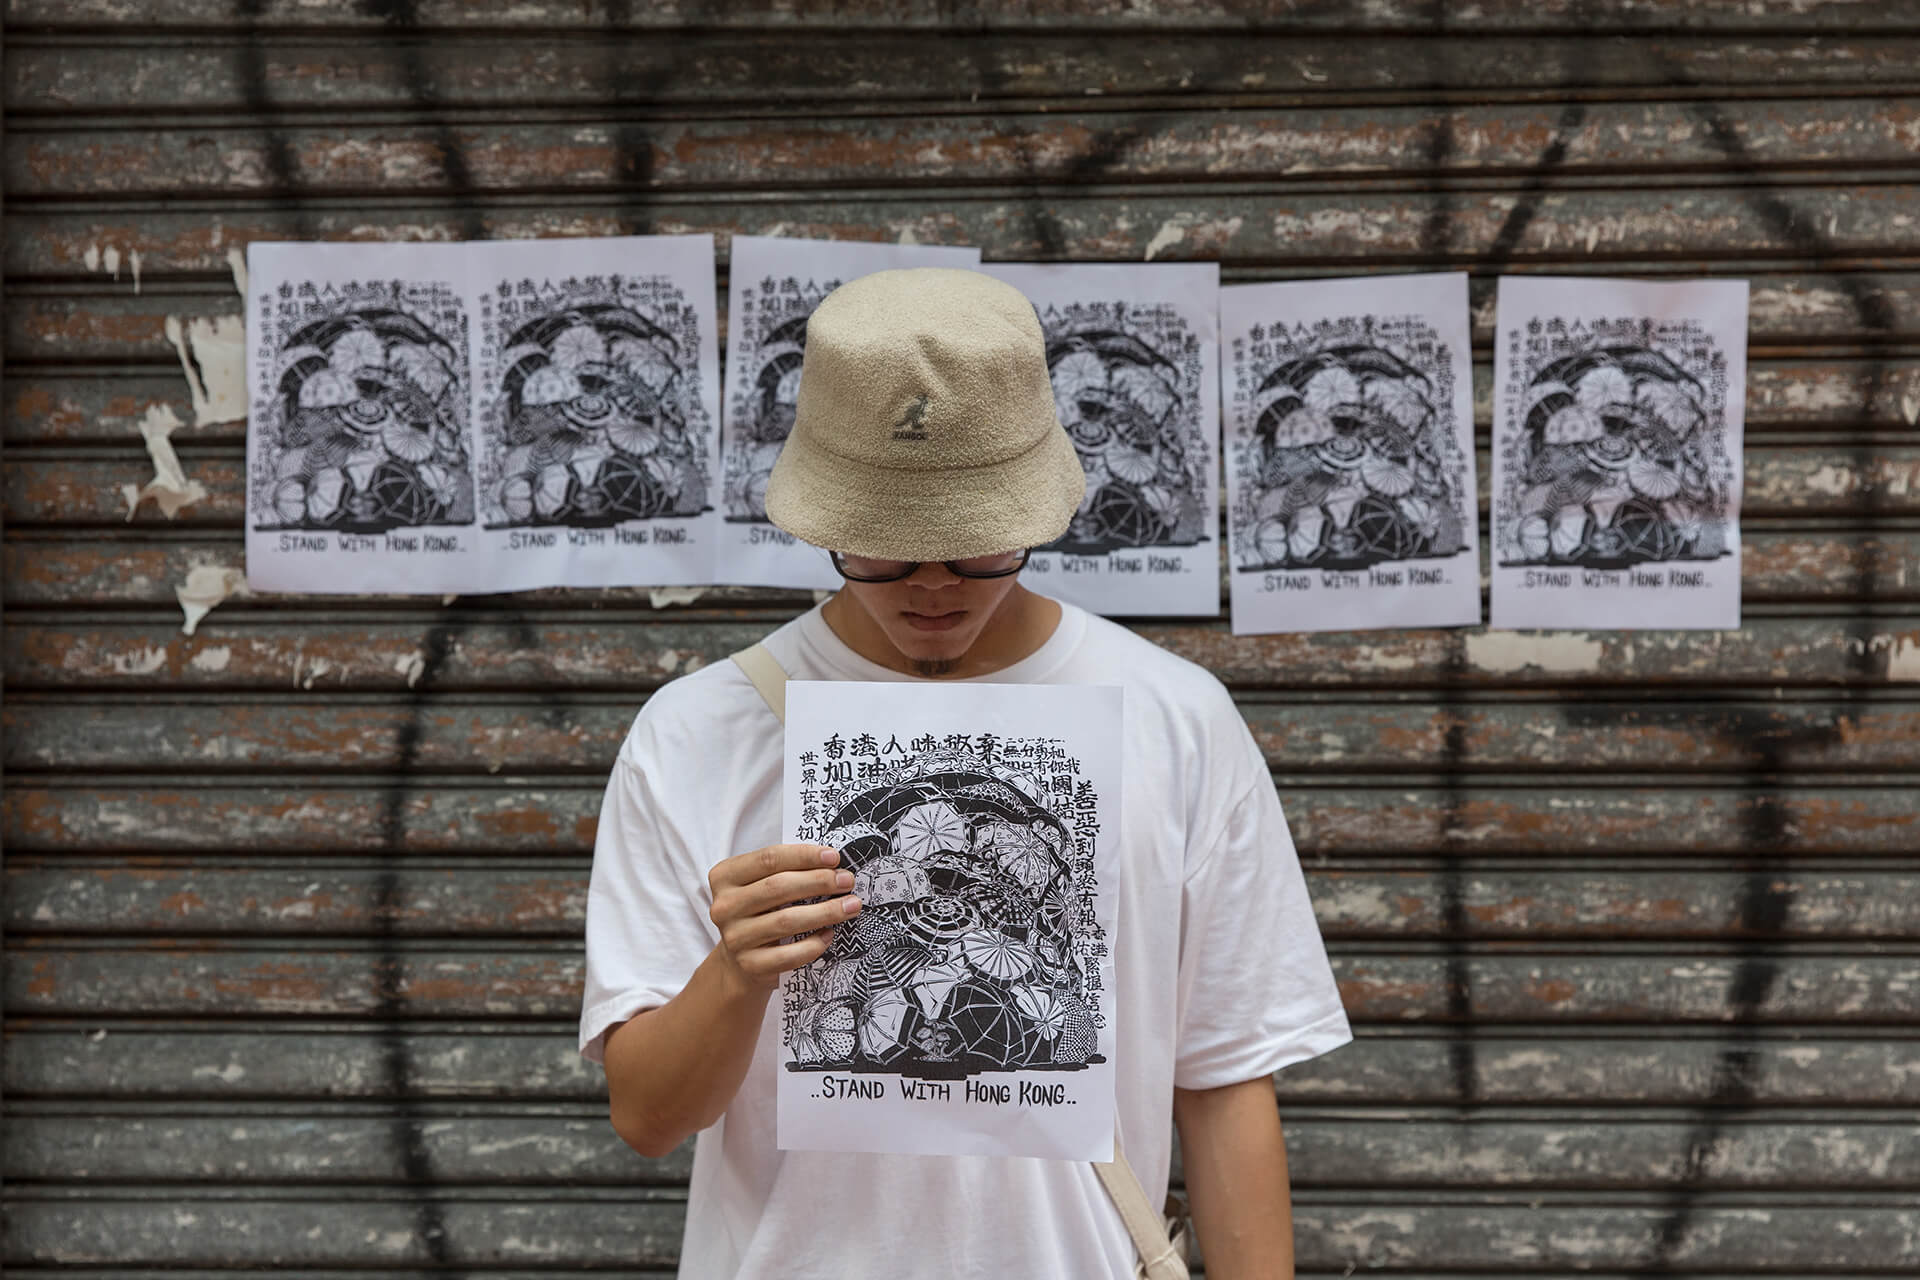 Boms是街頭藝術家，但在抗爭的日子，他把自己當作是文宣的人員，跟香港人一同付出就好。